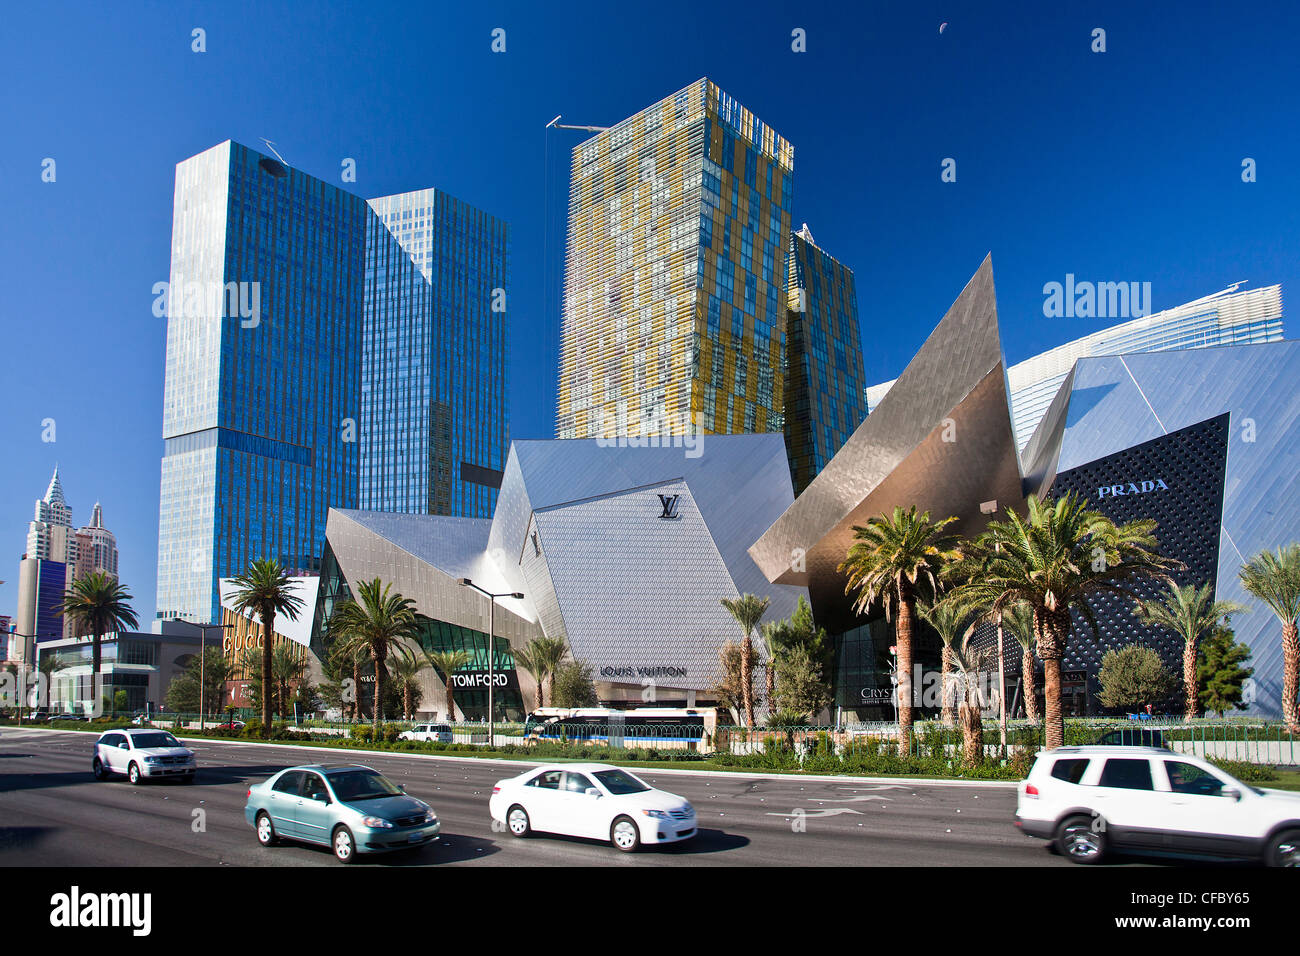 USA, United States, America, Nevada, Las Vegas, City, Strip, Avenue, Crystals Hotel, architecture, lean, busy, cars, casinos, ce Stock Photo